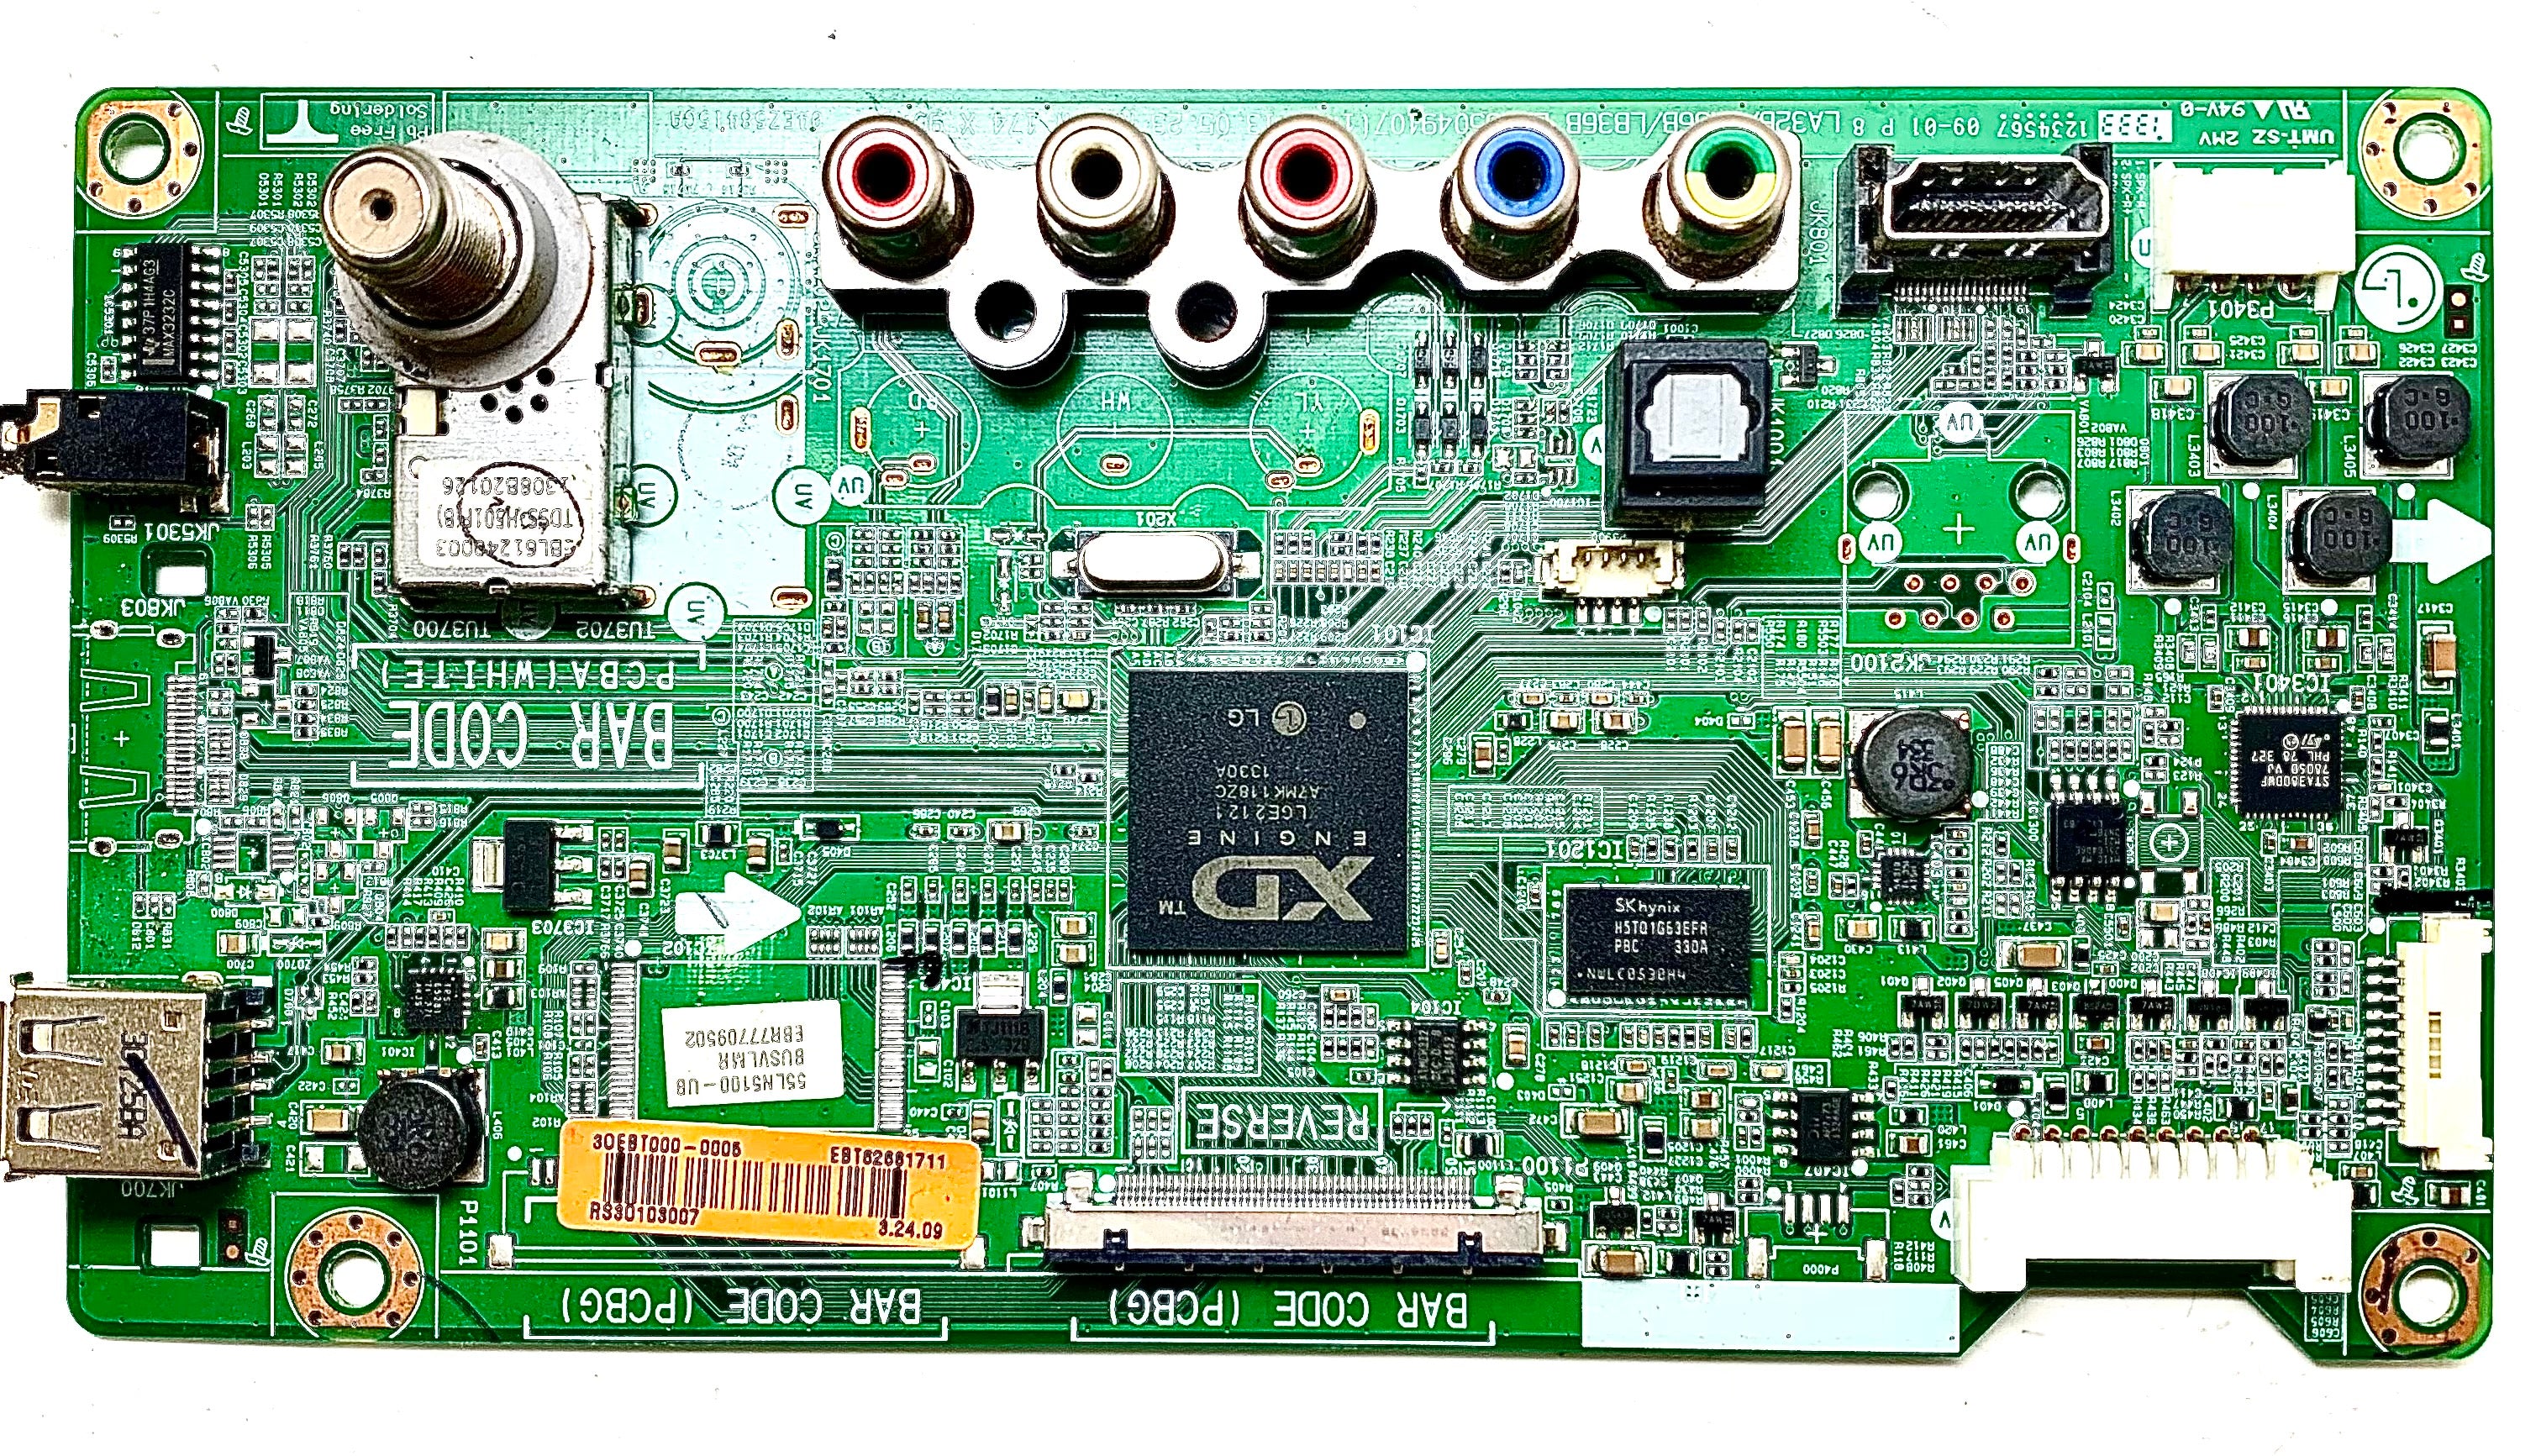 LG EBT62681711 Main Board for 55LN5200-UB.BUSULJR 55LN5100-UB.BUSVLMR.